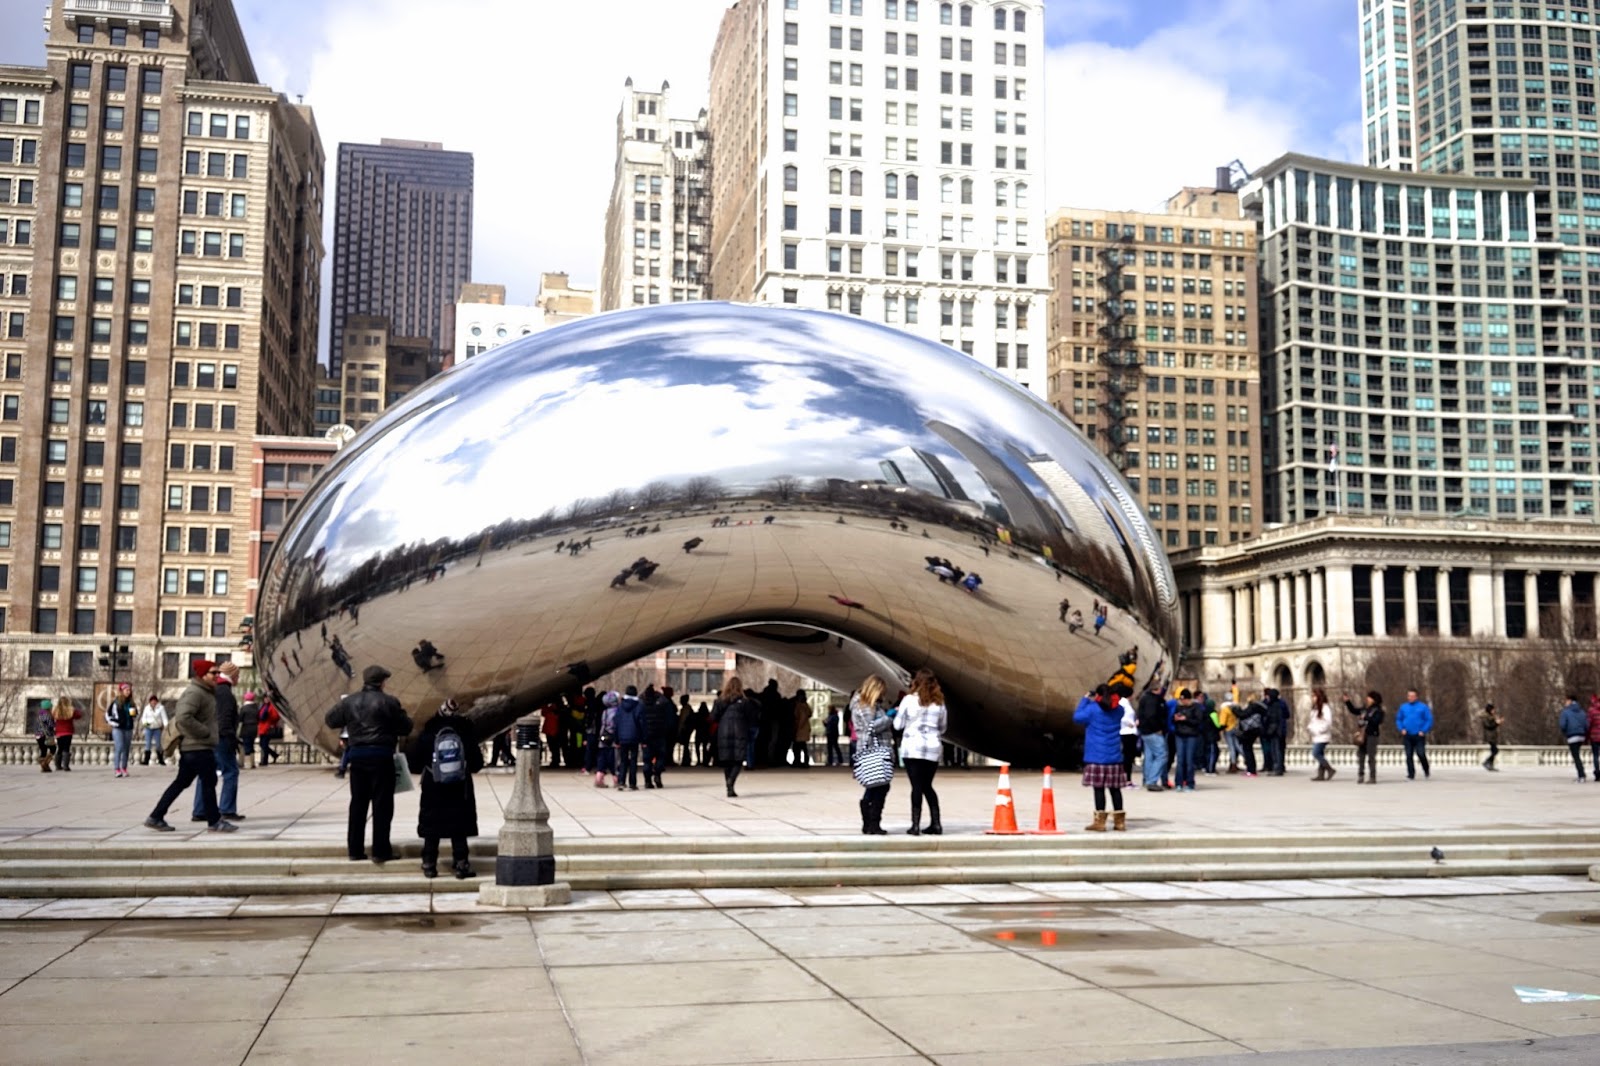 The bean chicago